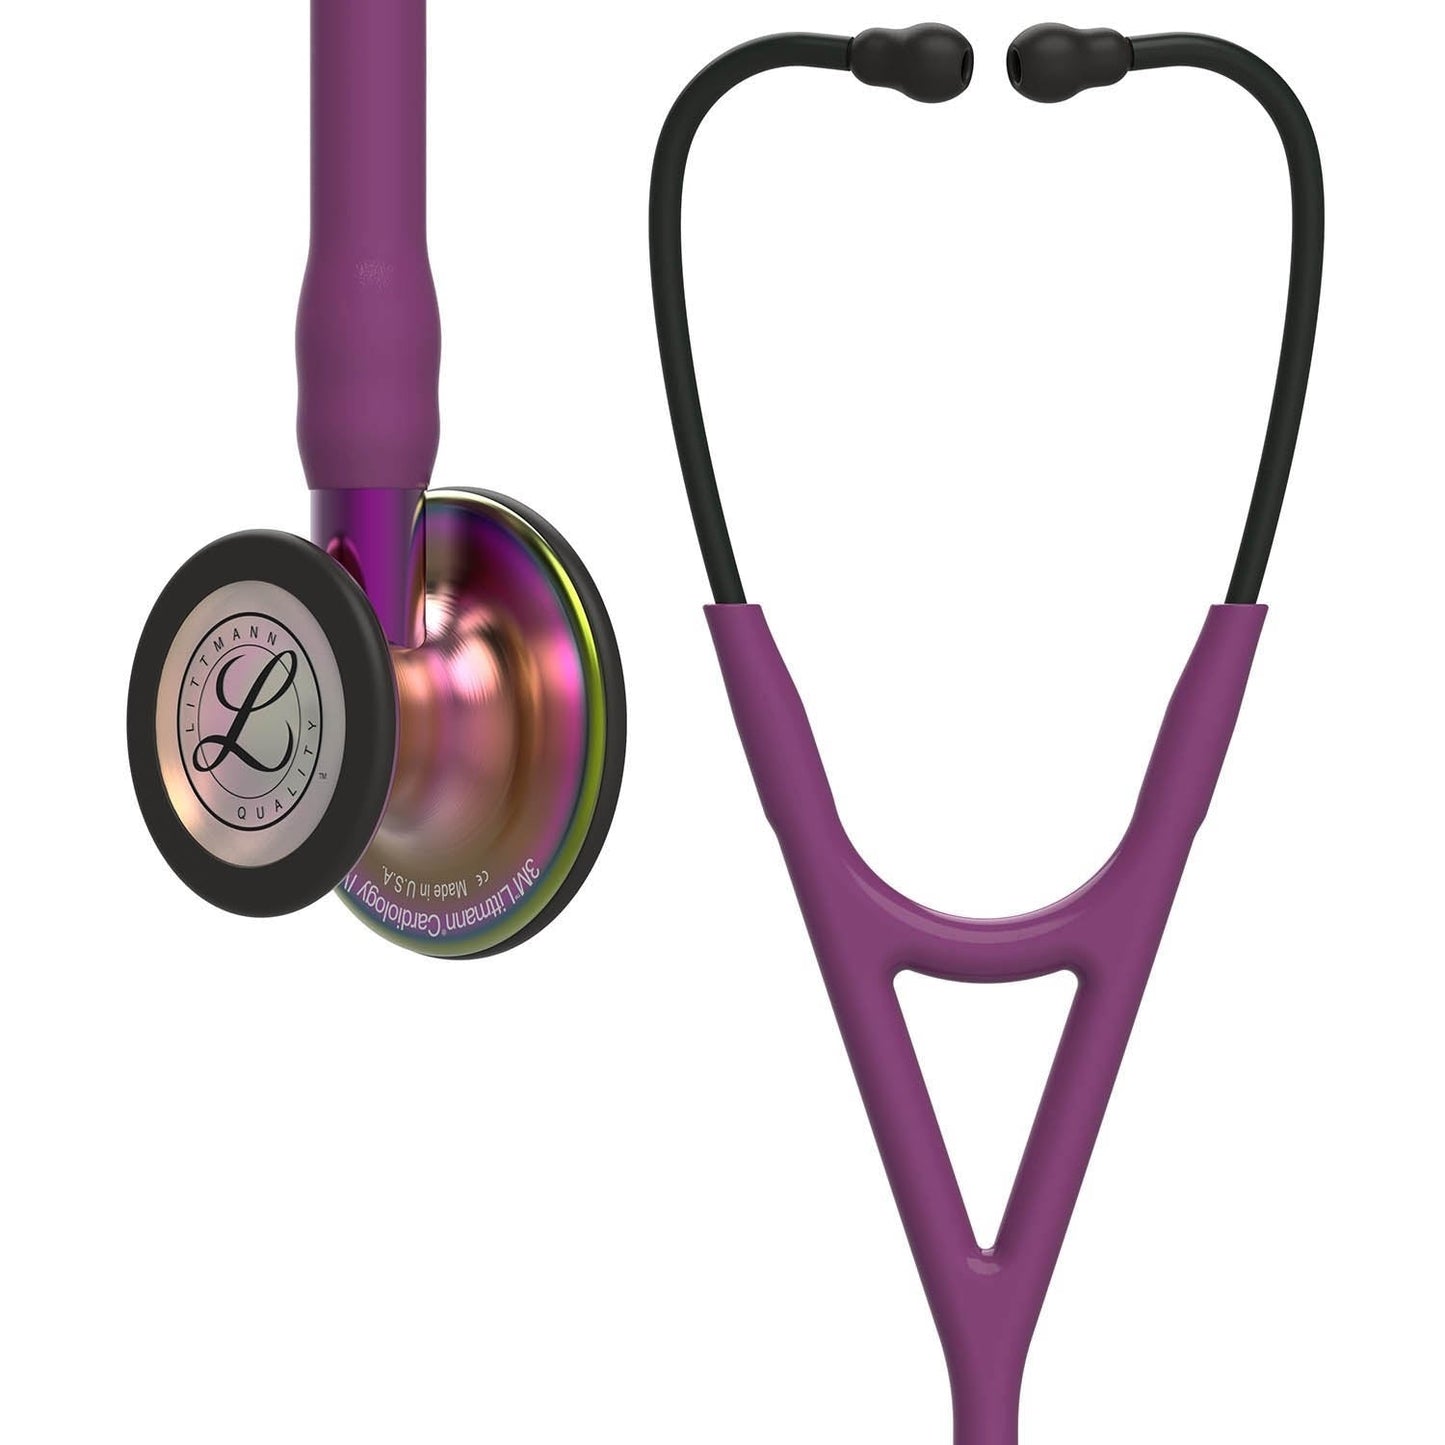 3M™ Littmann® Cardiology IV™ Fonendoscopio para diagnóstico, campana de acabado arcoíris, con tubo color ciruela, vástago morado y auricular color negro, 68,5 cm, 6205